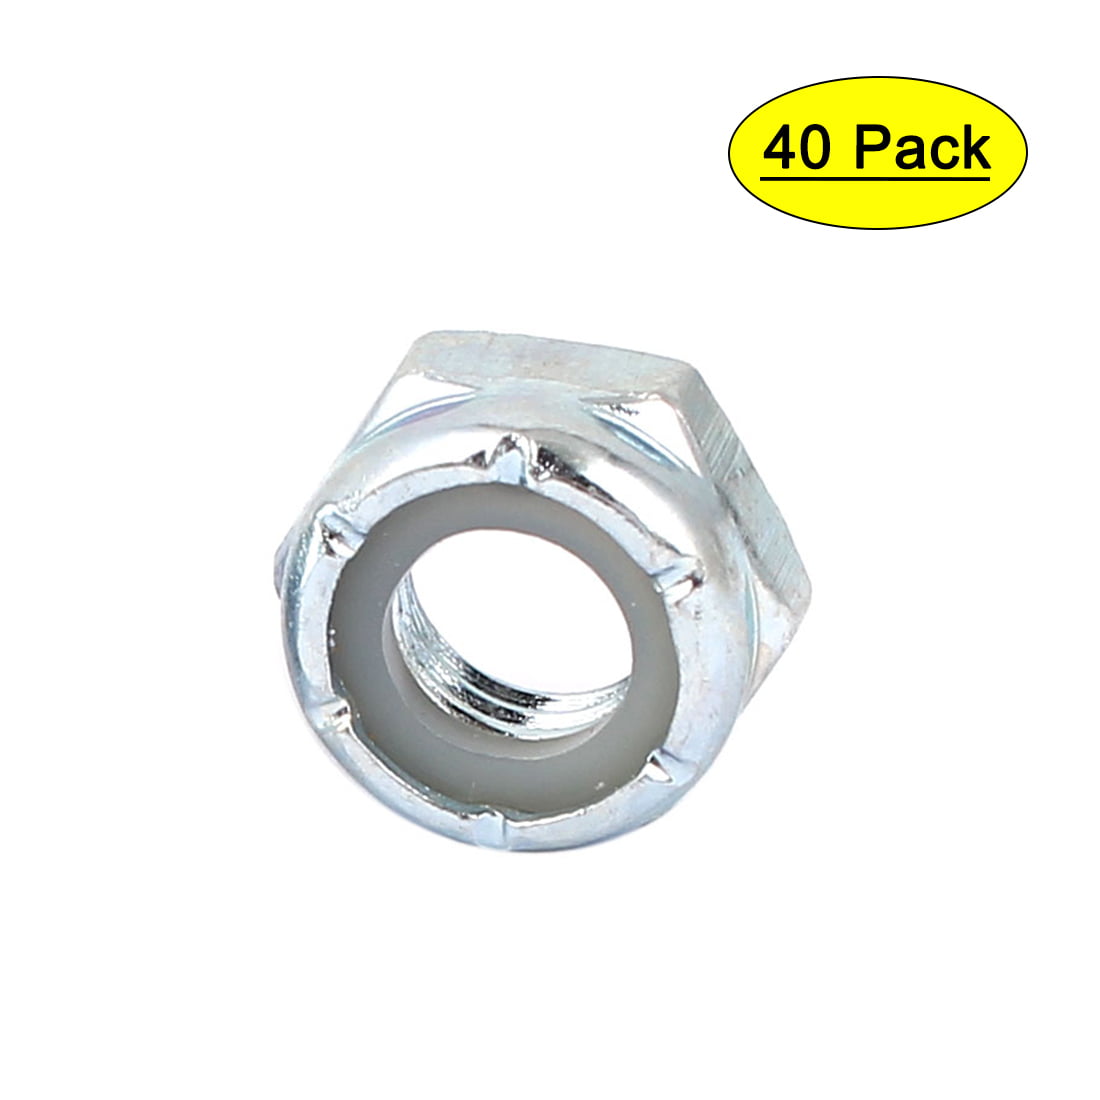 100pcs 8-32 Zinc Plated Nylock Self-Locking Nylon Insert Hex Lock Nut 